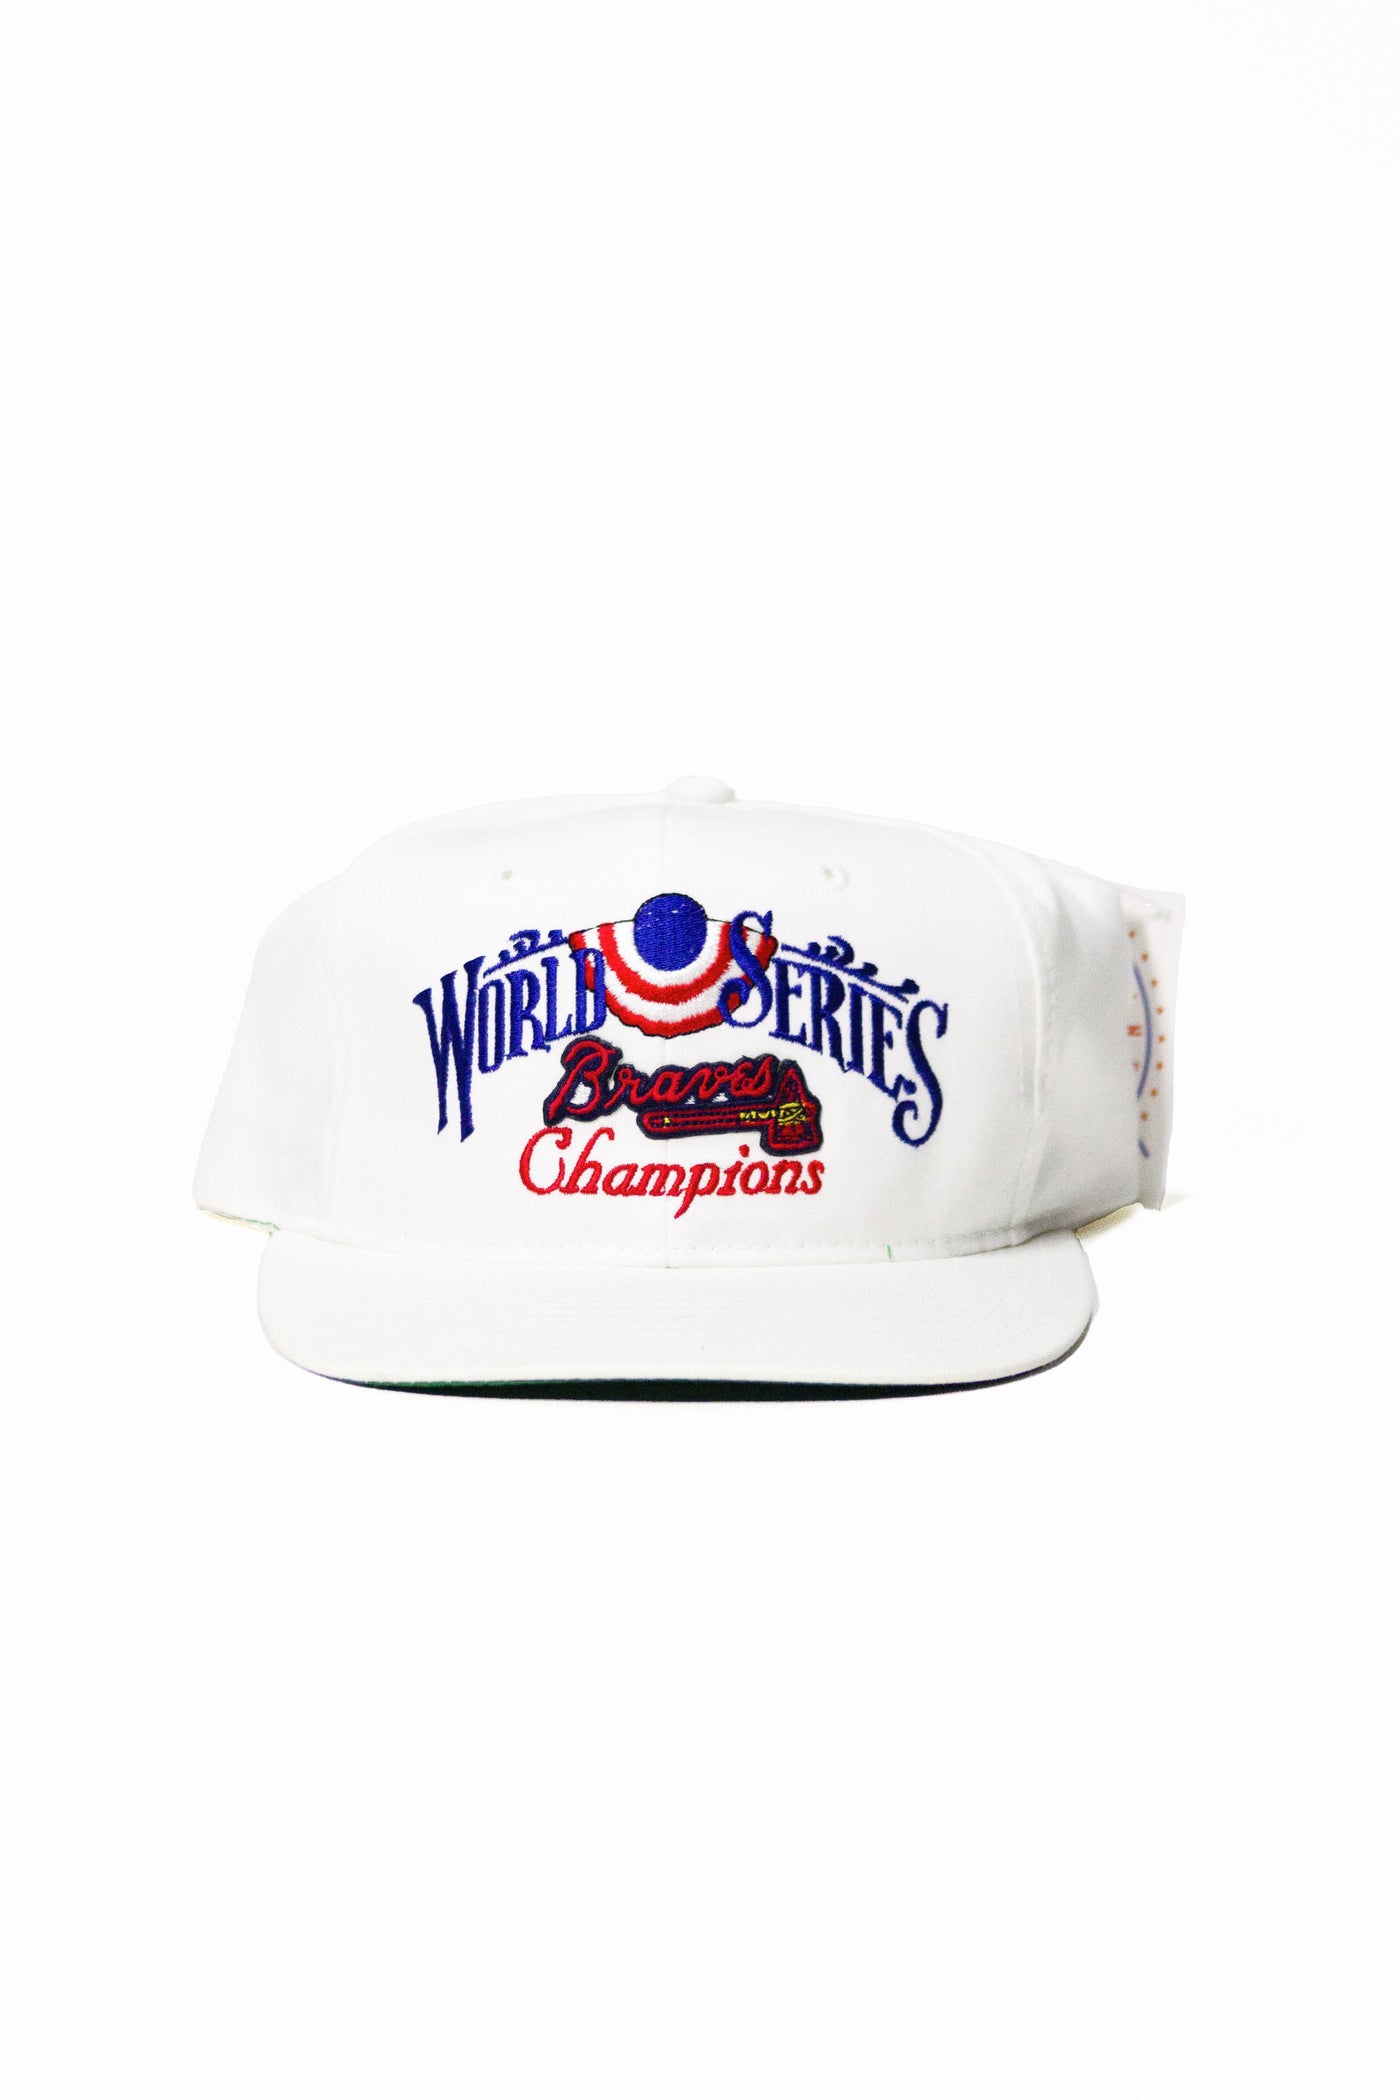 Vintage 1995 Atlanta Braves World Series Champs Snapback